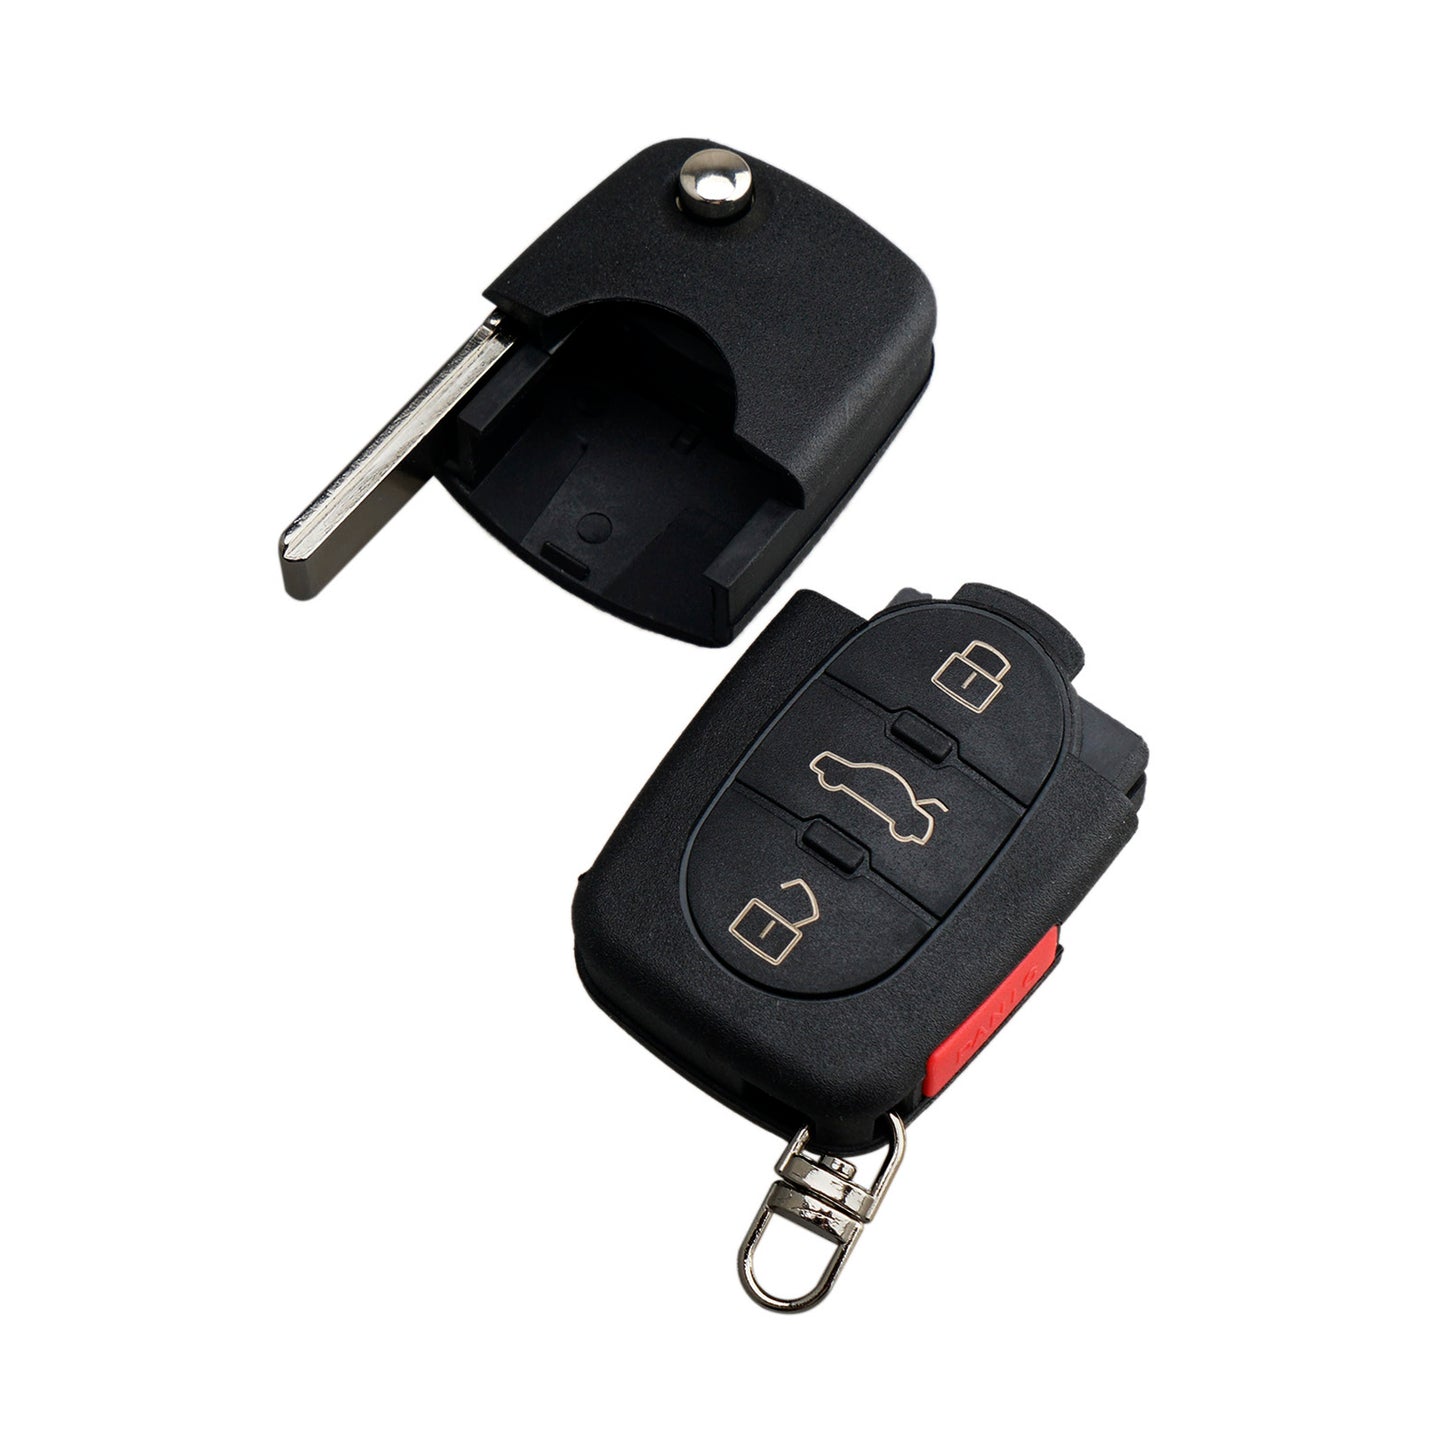 4 Buttons 315MHz Keyless Entry Fob Remote Car Key For 1997-2005 Audi A4 A6 A8 Allroad Quattro Cabriolet RS6 S4 S6 S8 TT Quattro FCC ID: MYT8Z0837231 SKU : J212